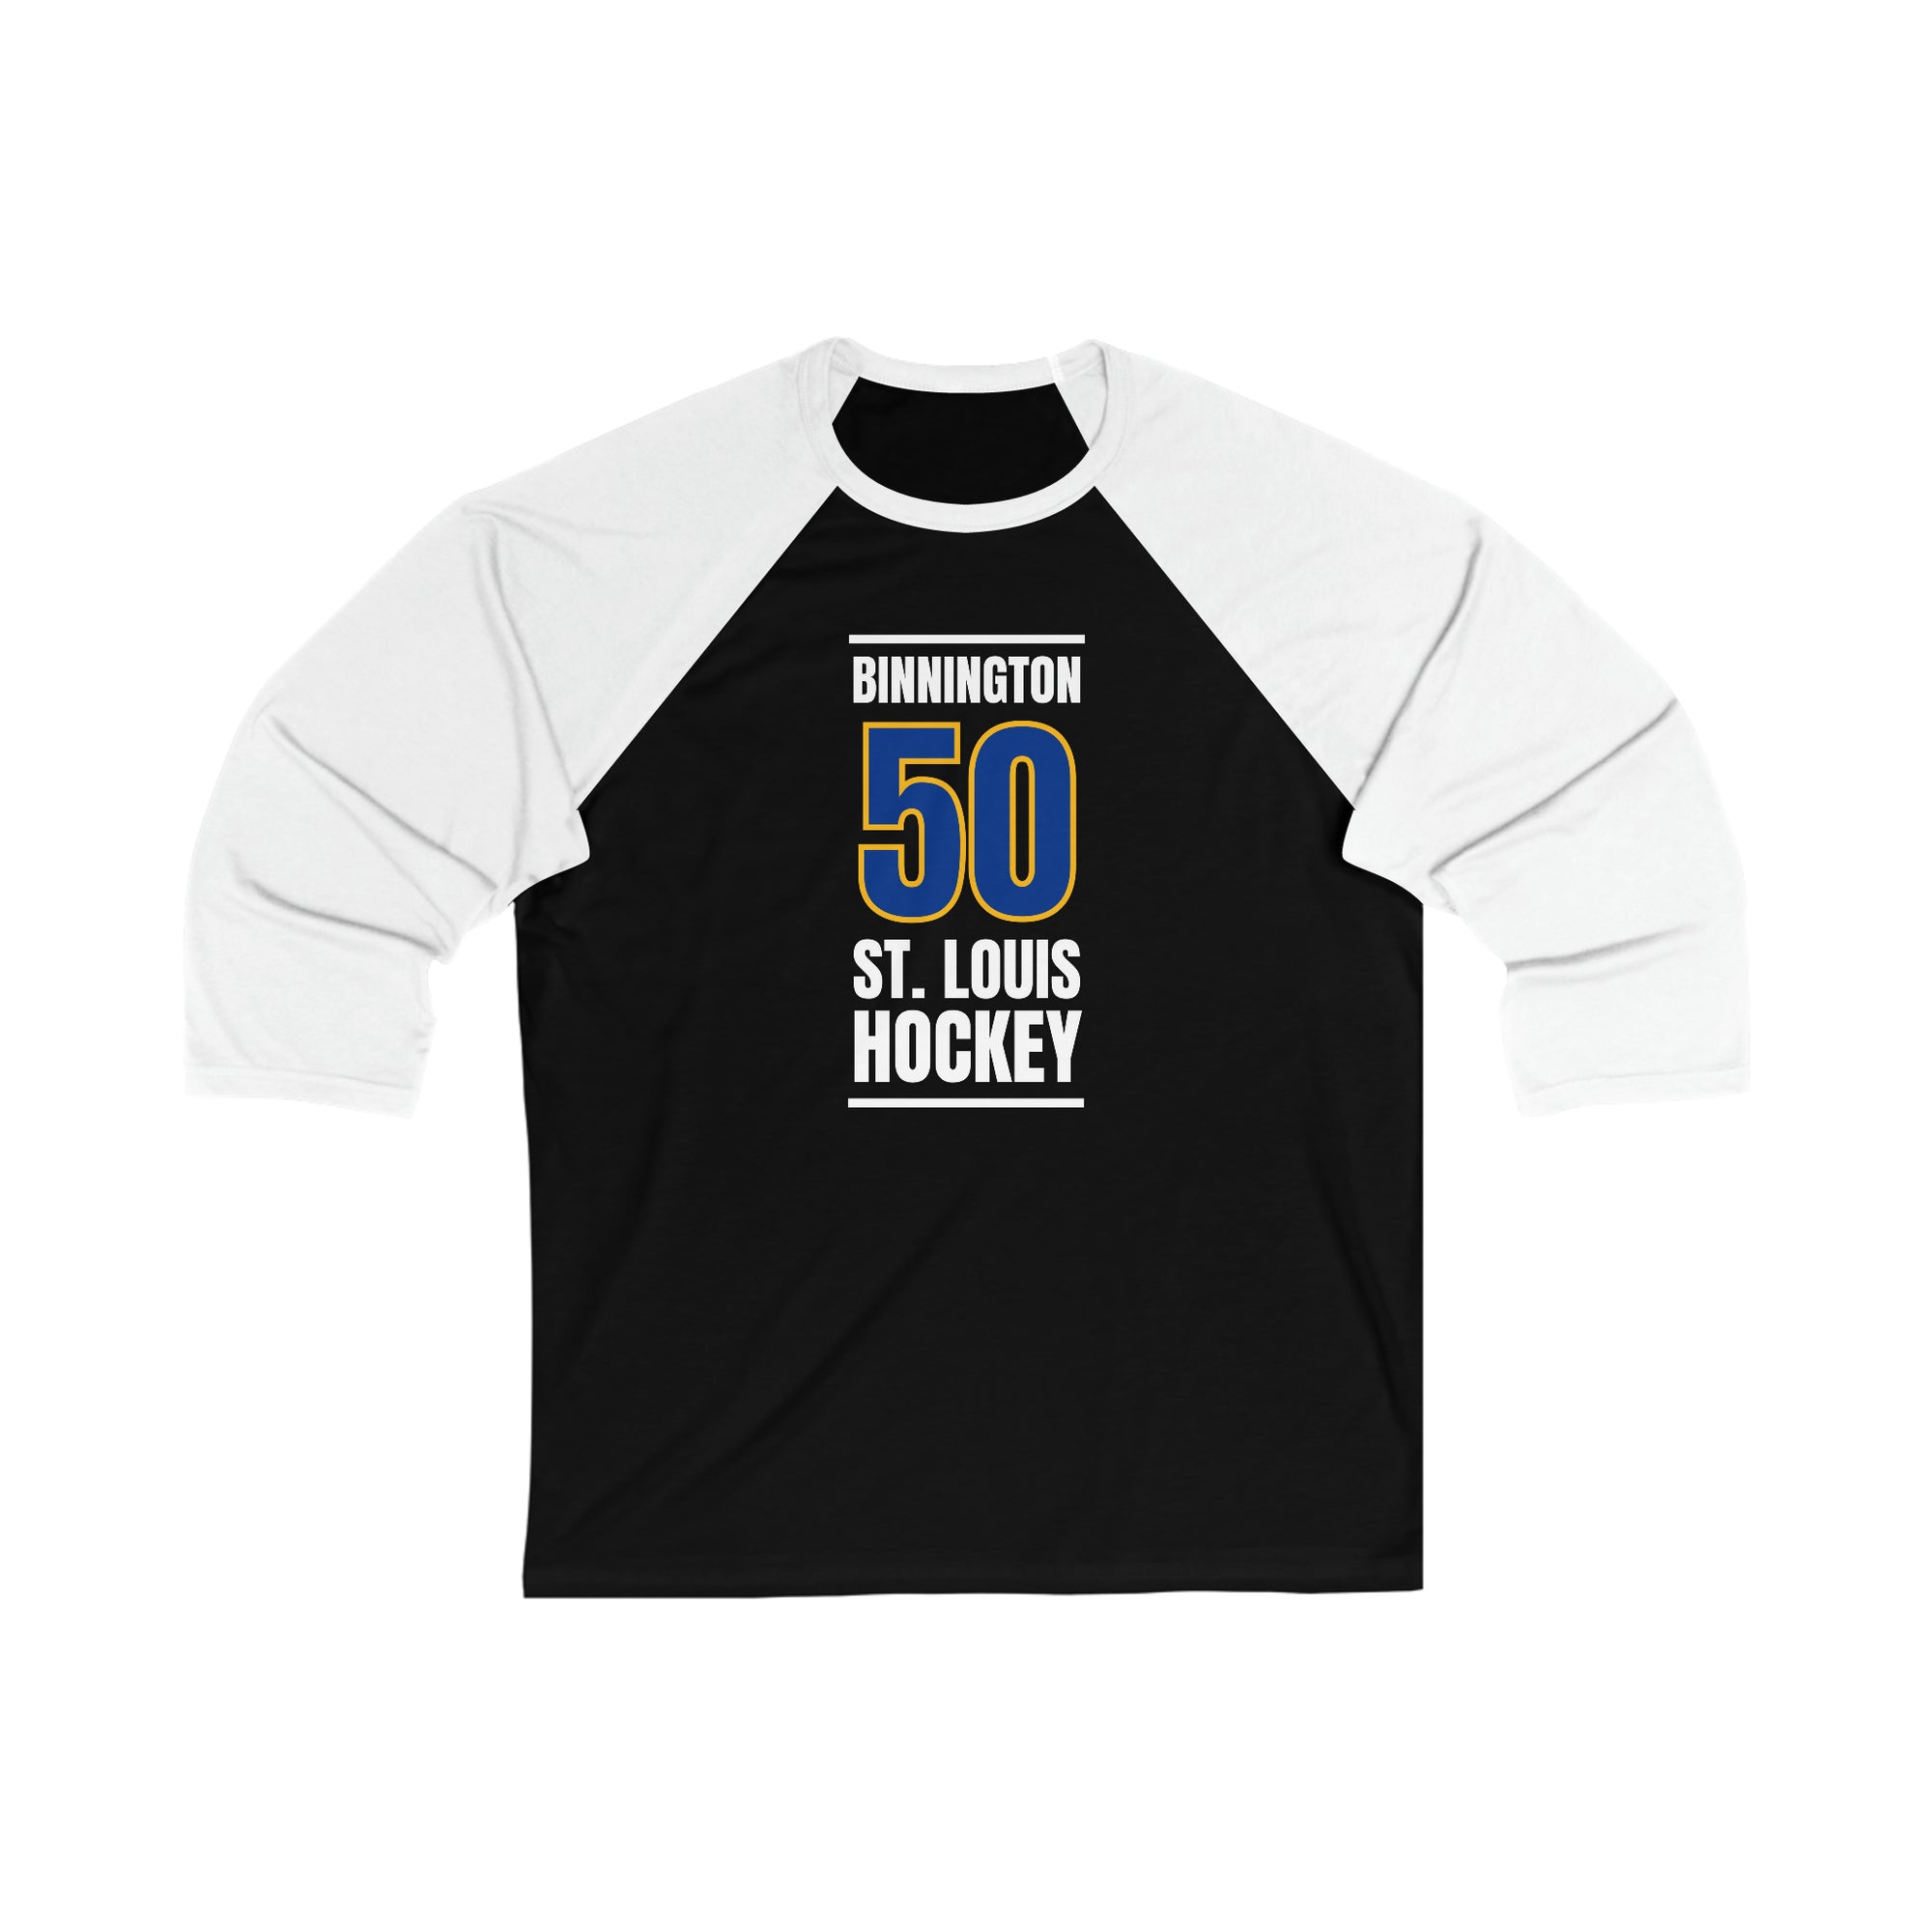 Jordan Kyrou Youth Shirt, St. Louis Hockey Kids T-Shirt